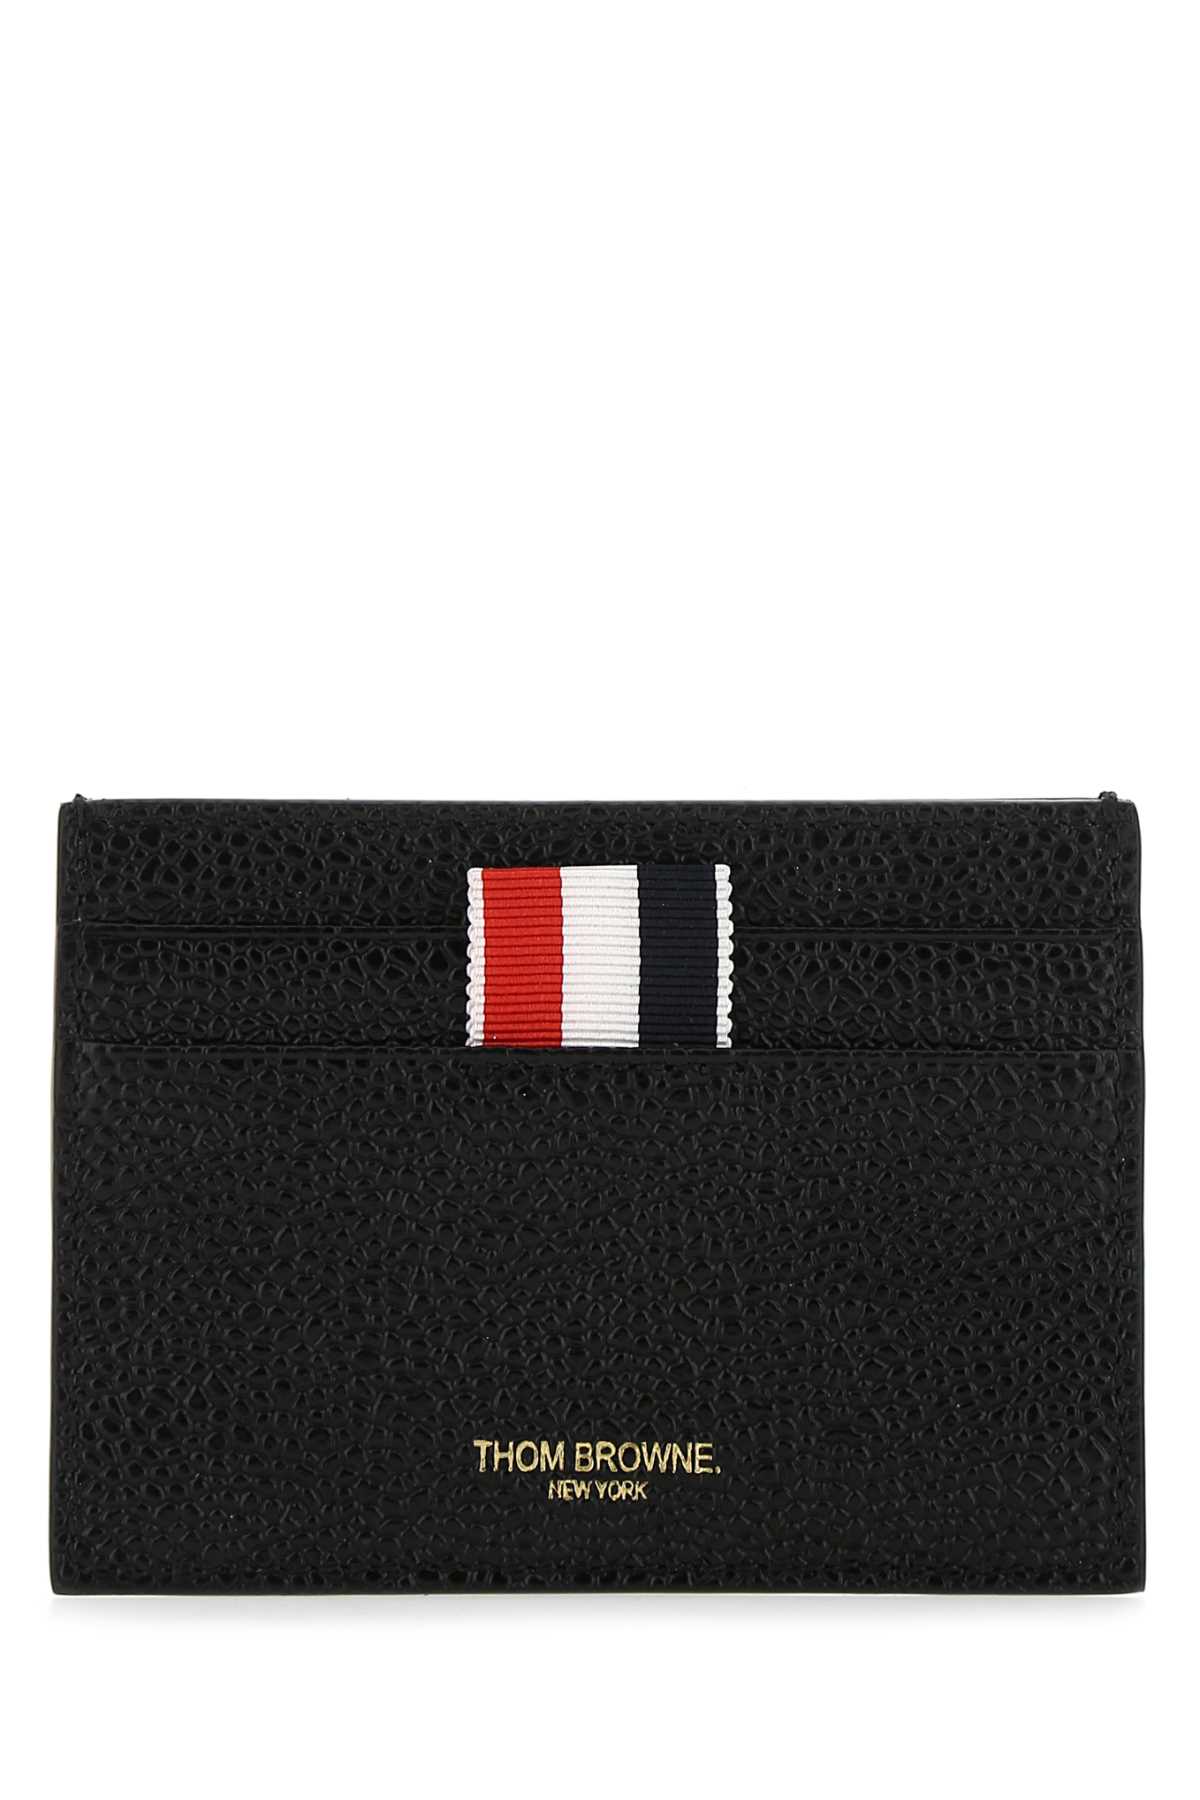 Thom Browne Black Leather Card Holder